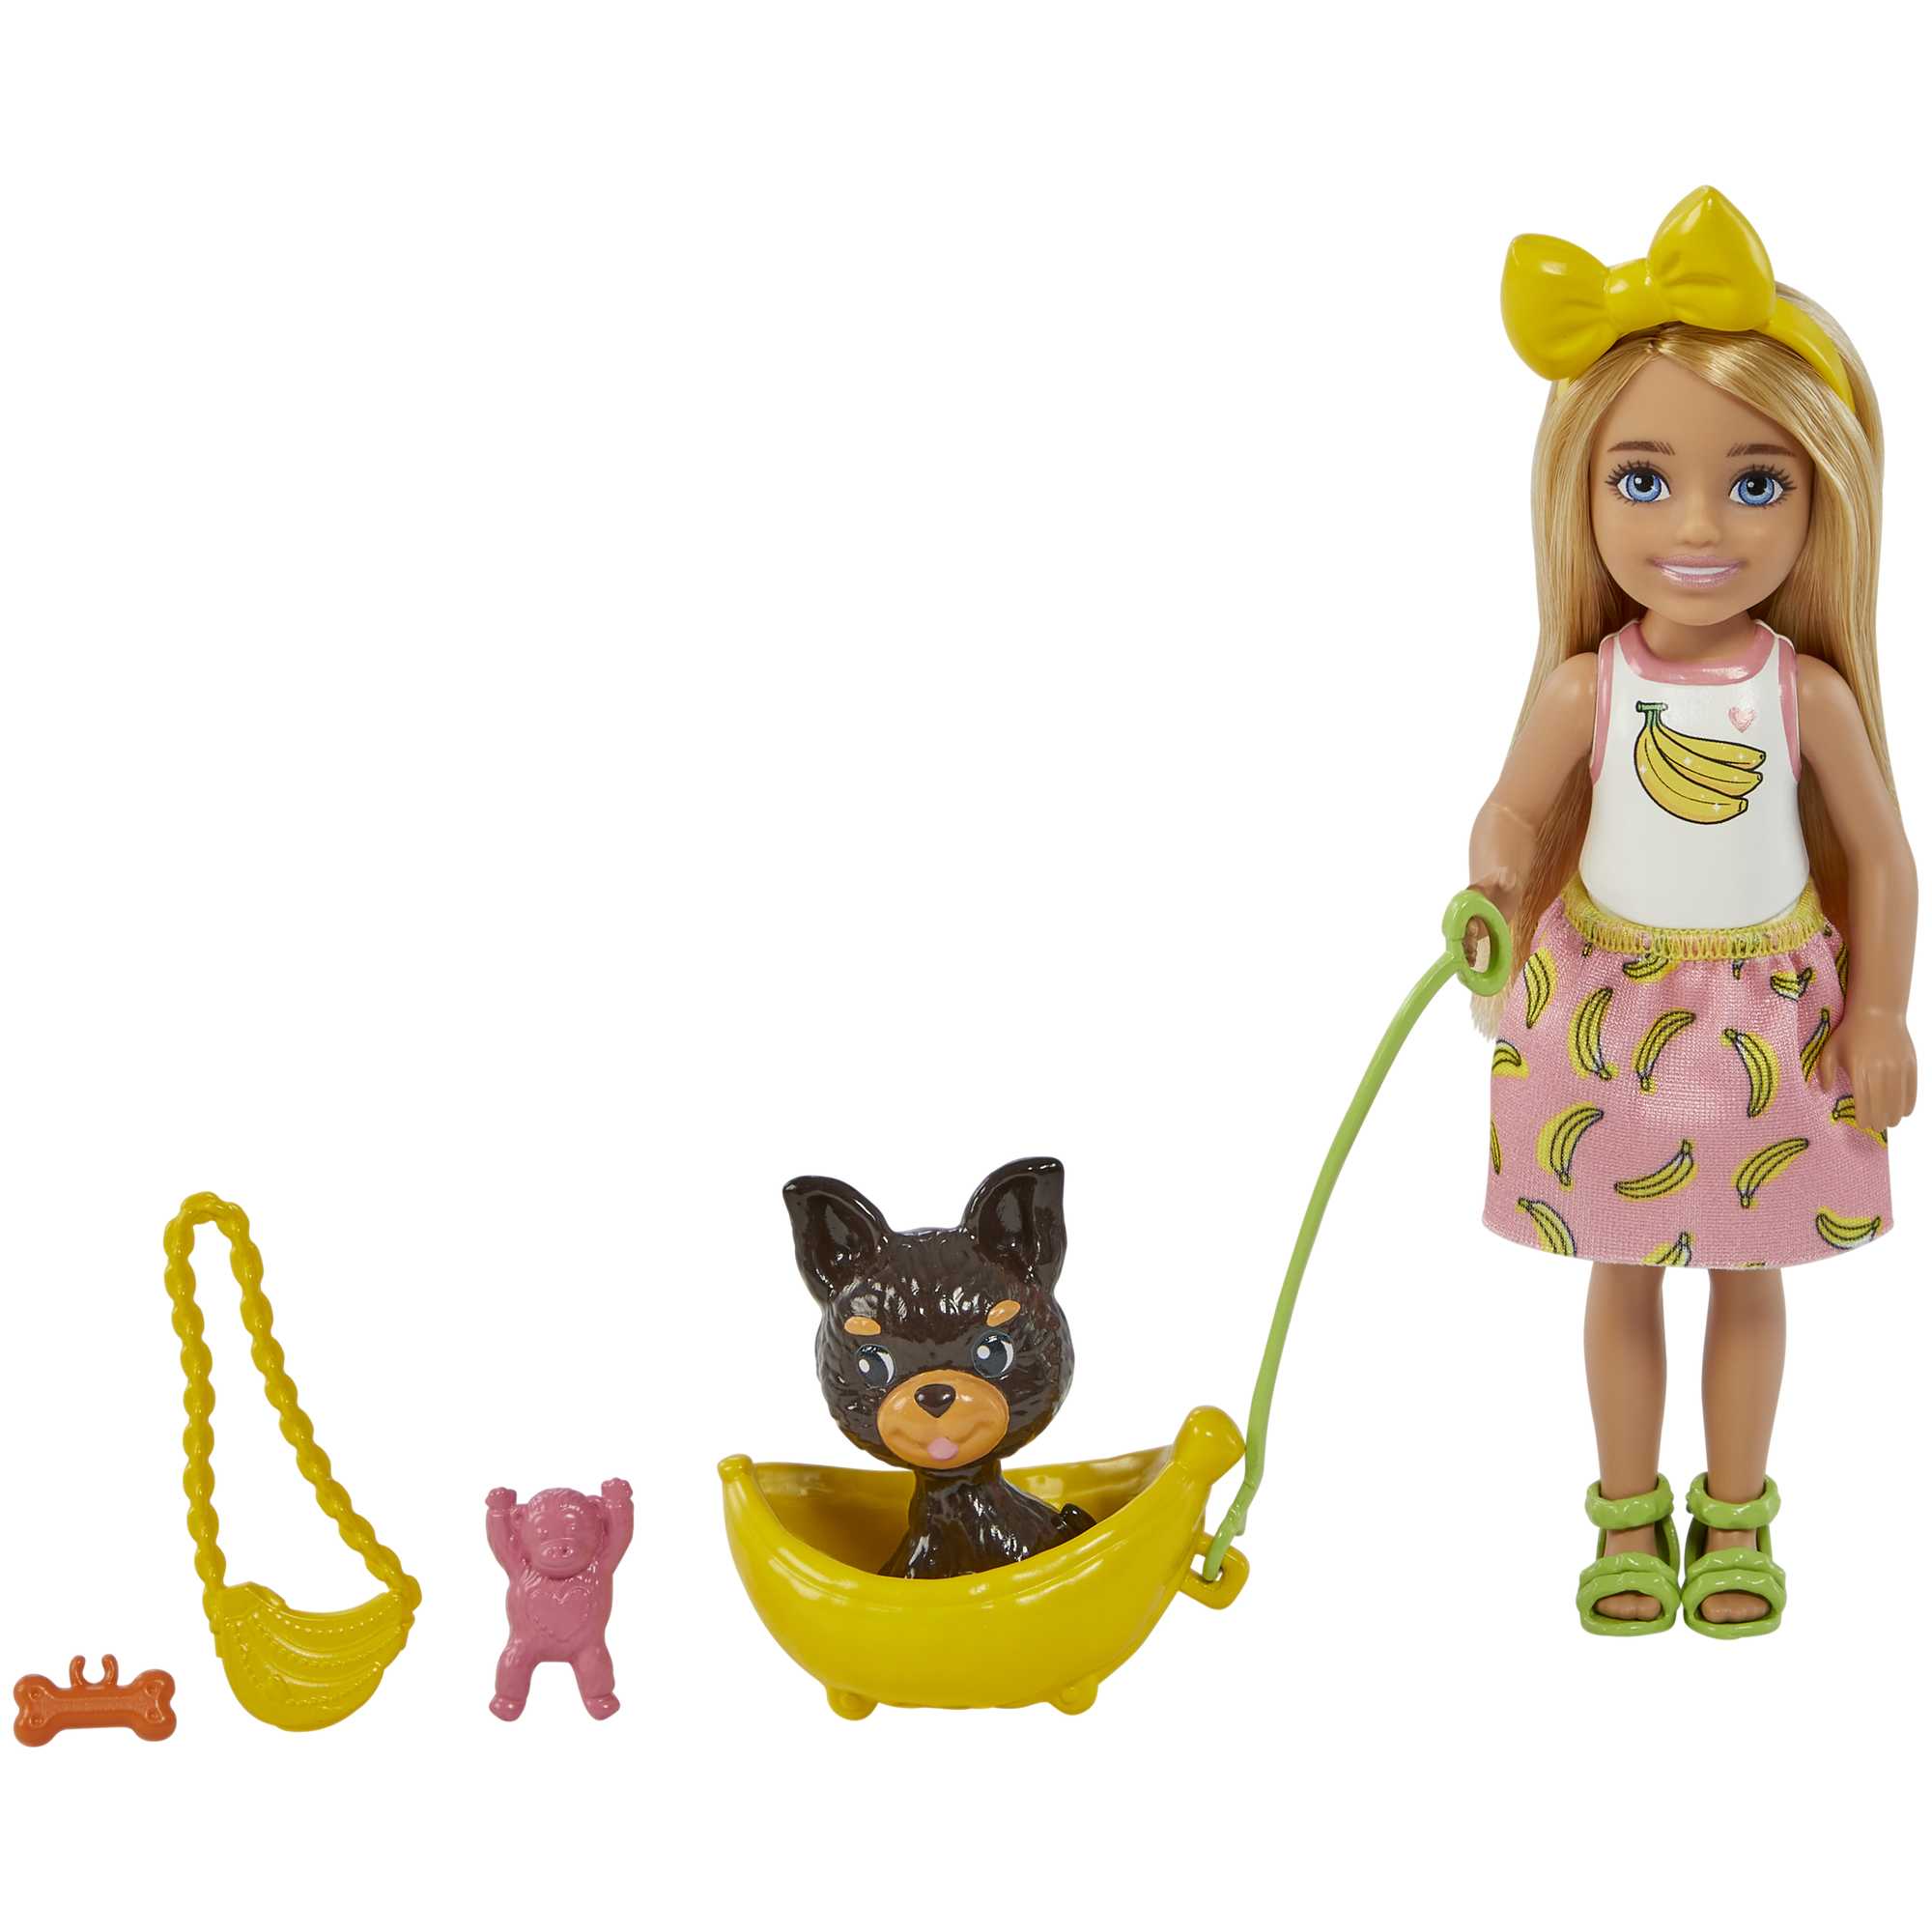 Barbie Chelsea Doll & Accessories | Mattel